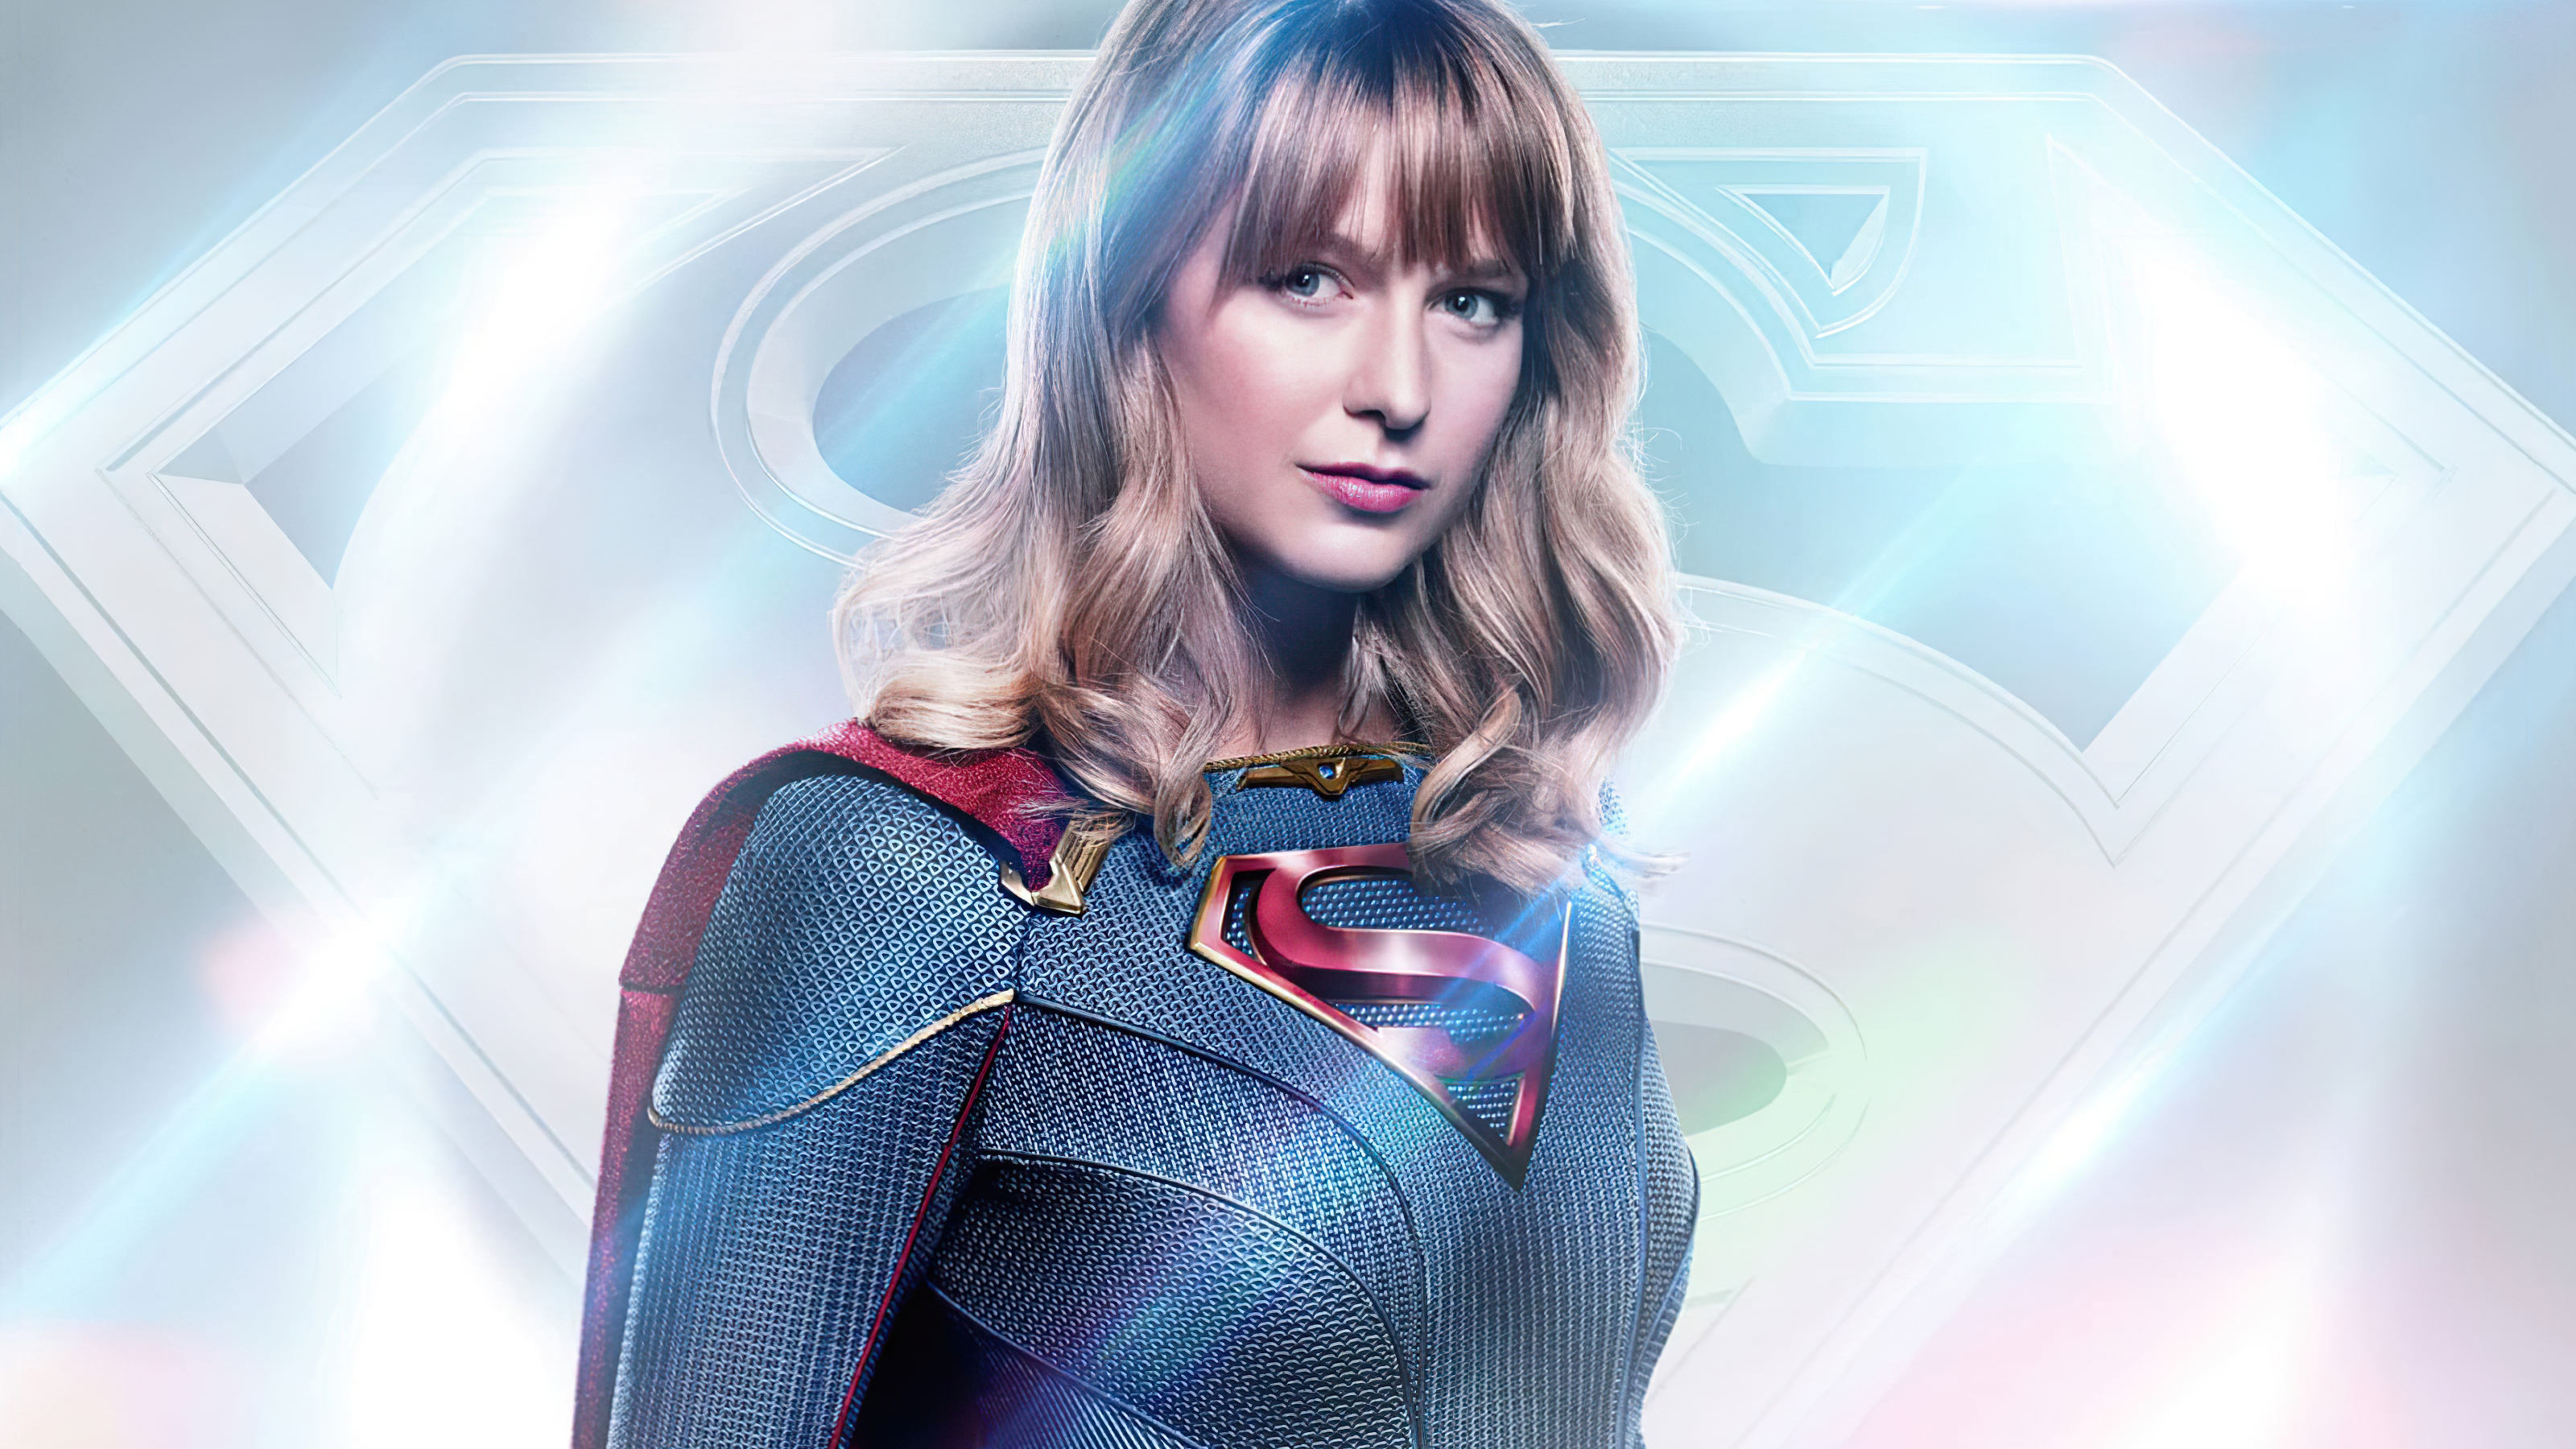 Supergirl Season 5 Wallpapers